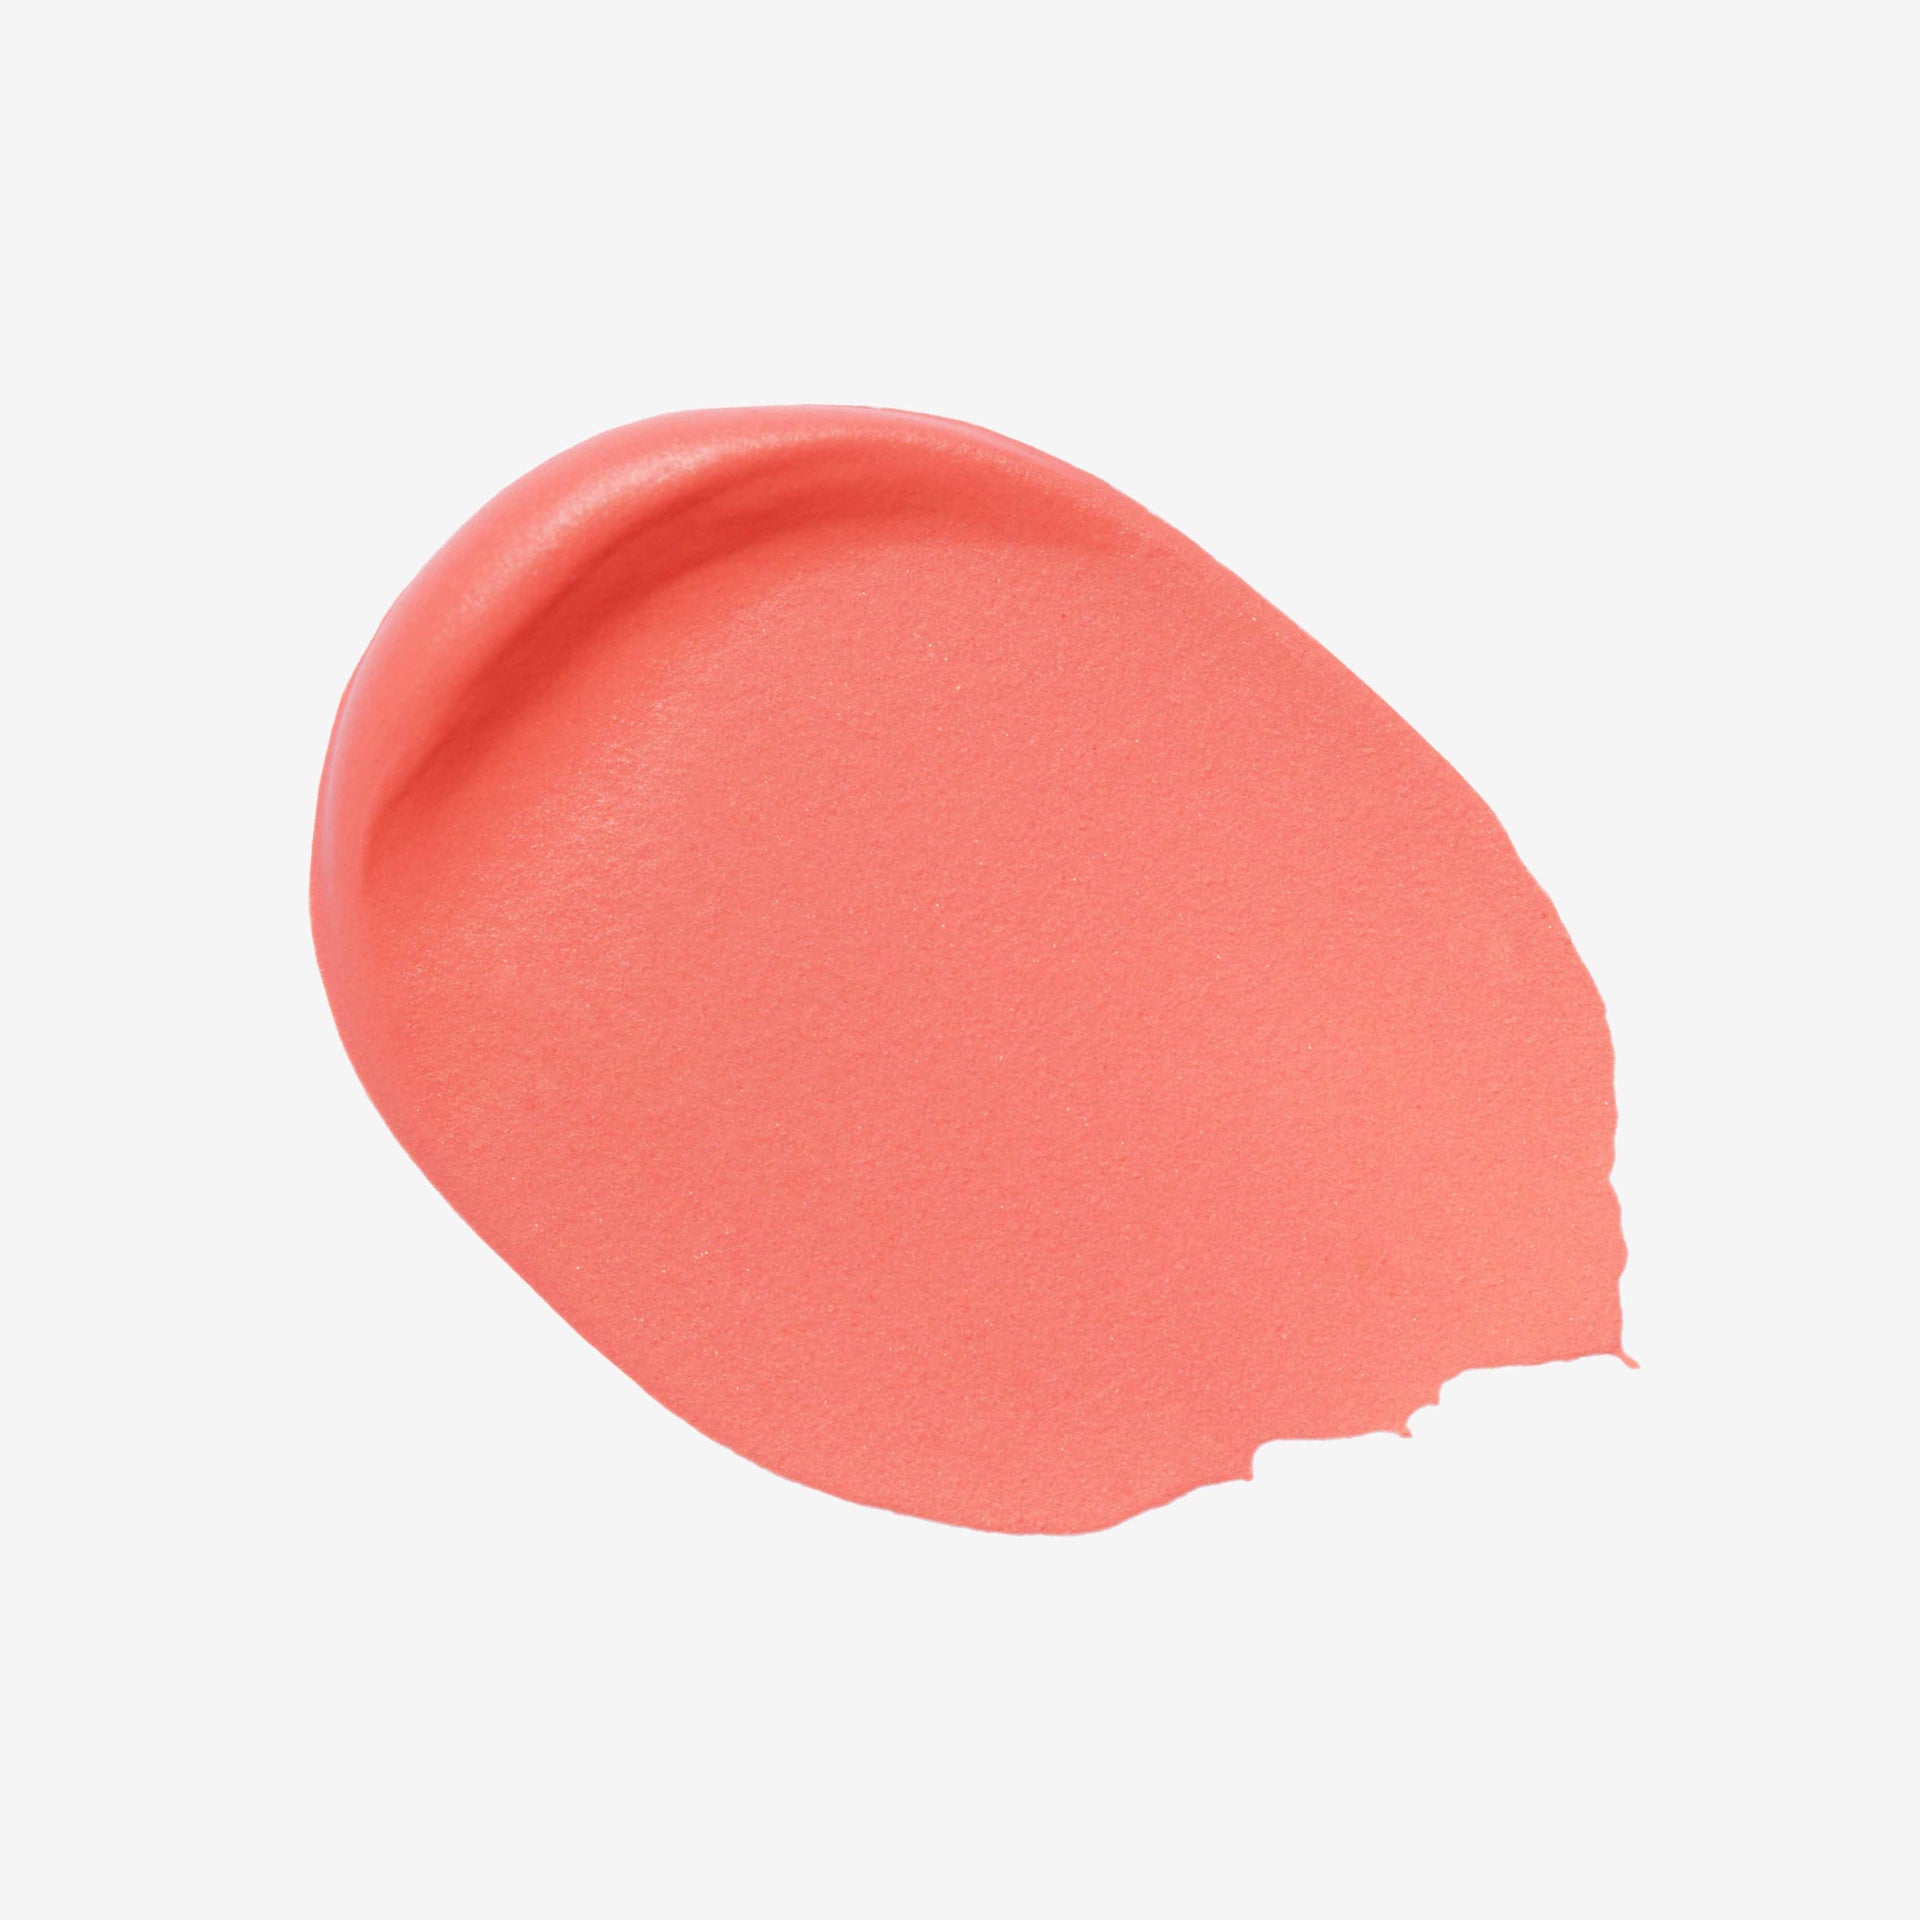 Peach | Blurring Serum Blush - Peach Swatch Image